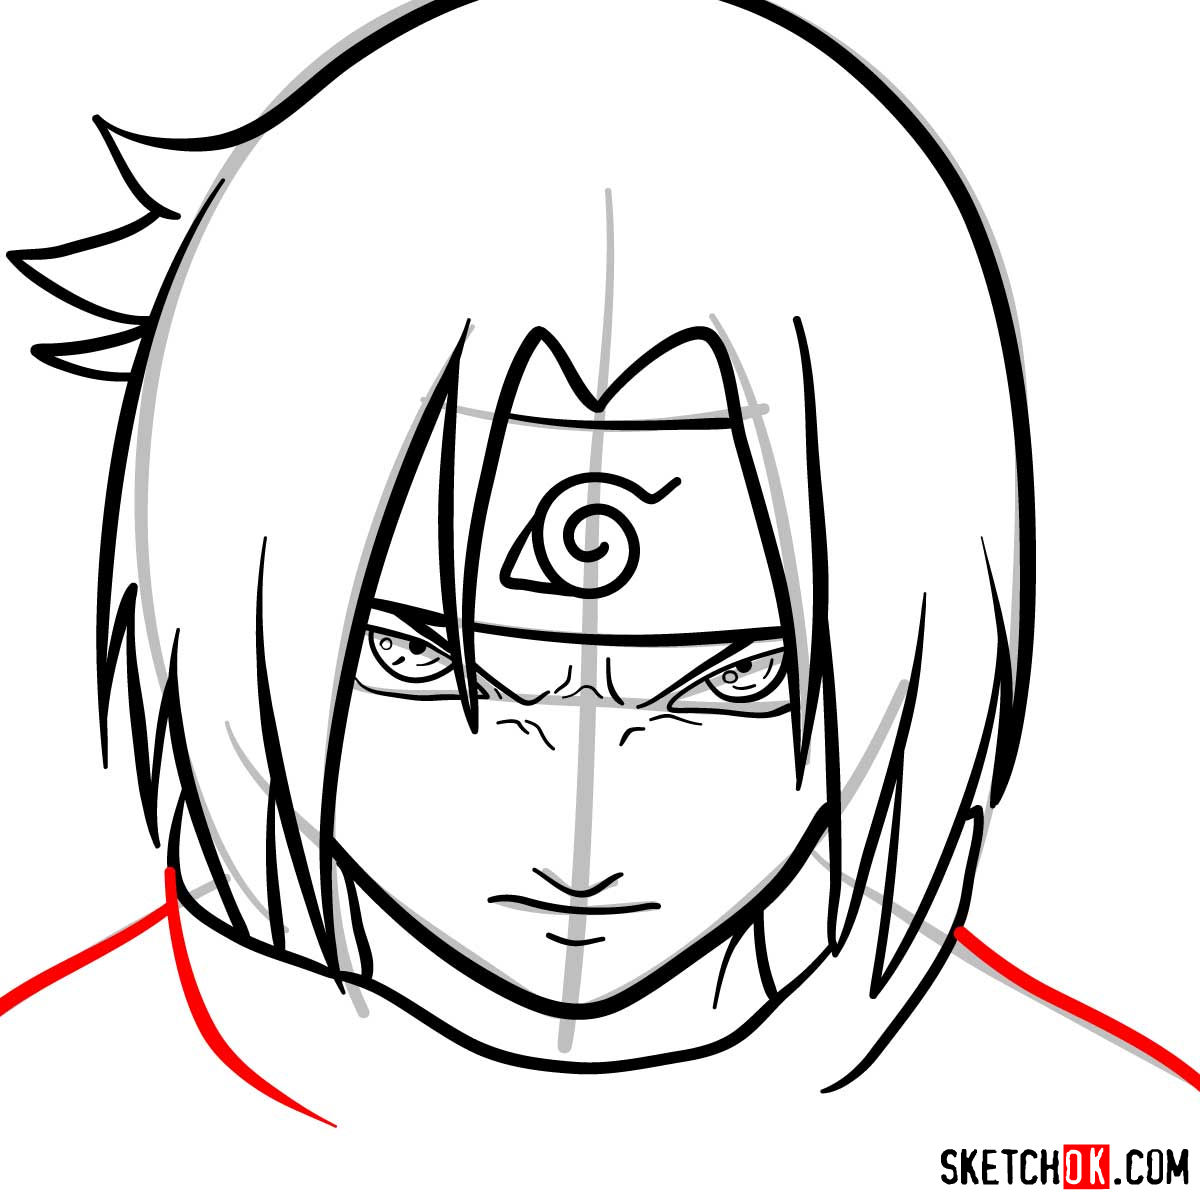 How to draw Sasuke's face (Naruto anime) - step 09